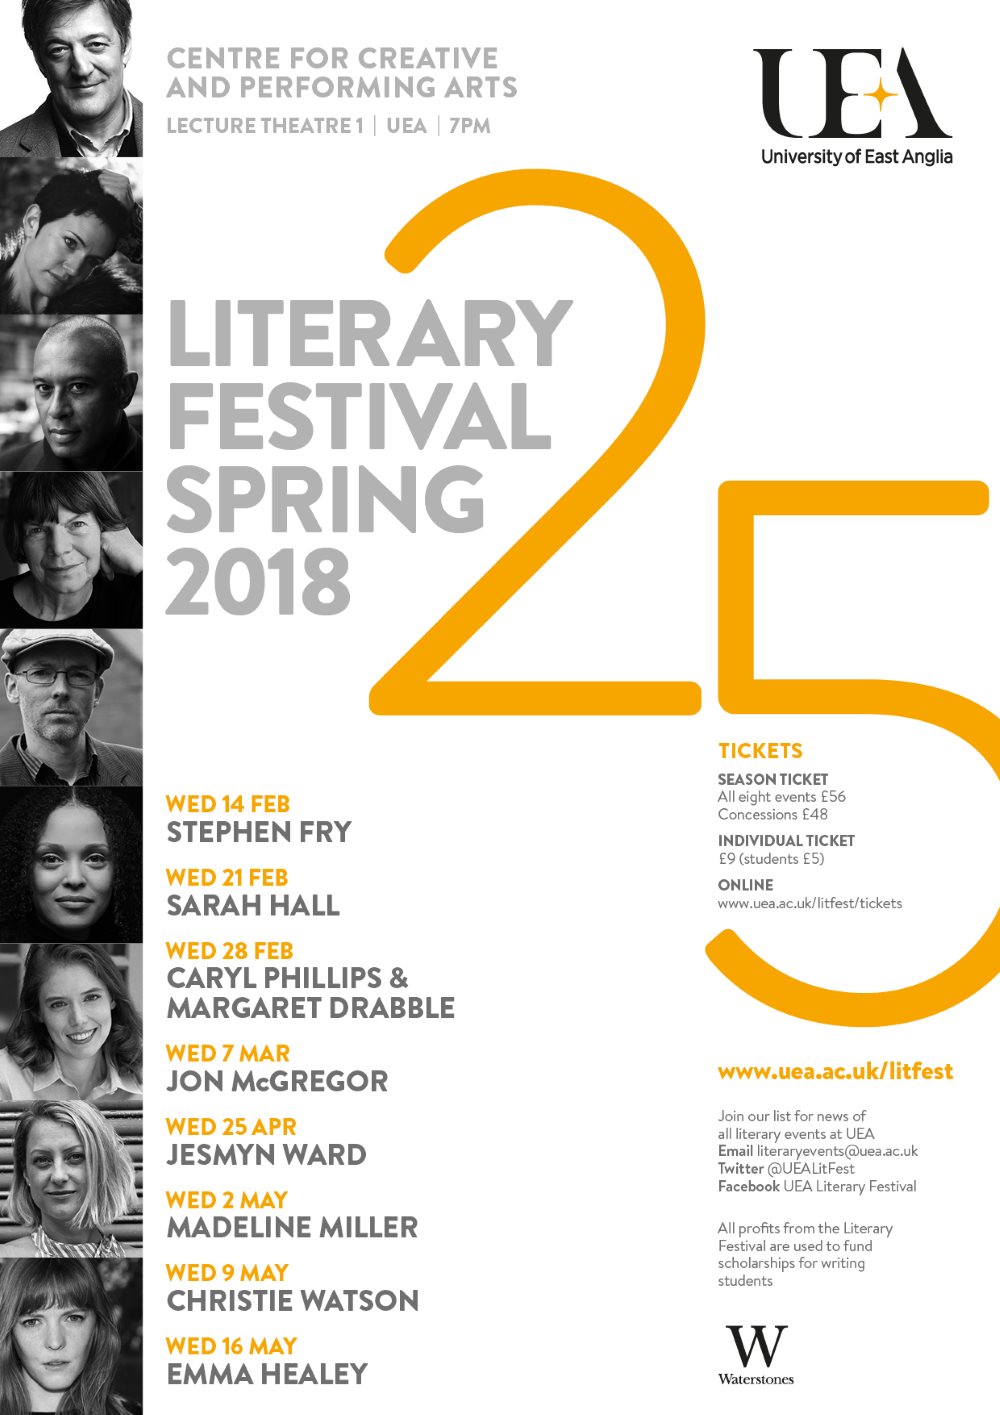 UEA 25th Spring Literary Festival line-up announced!